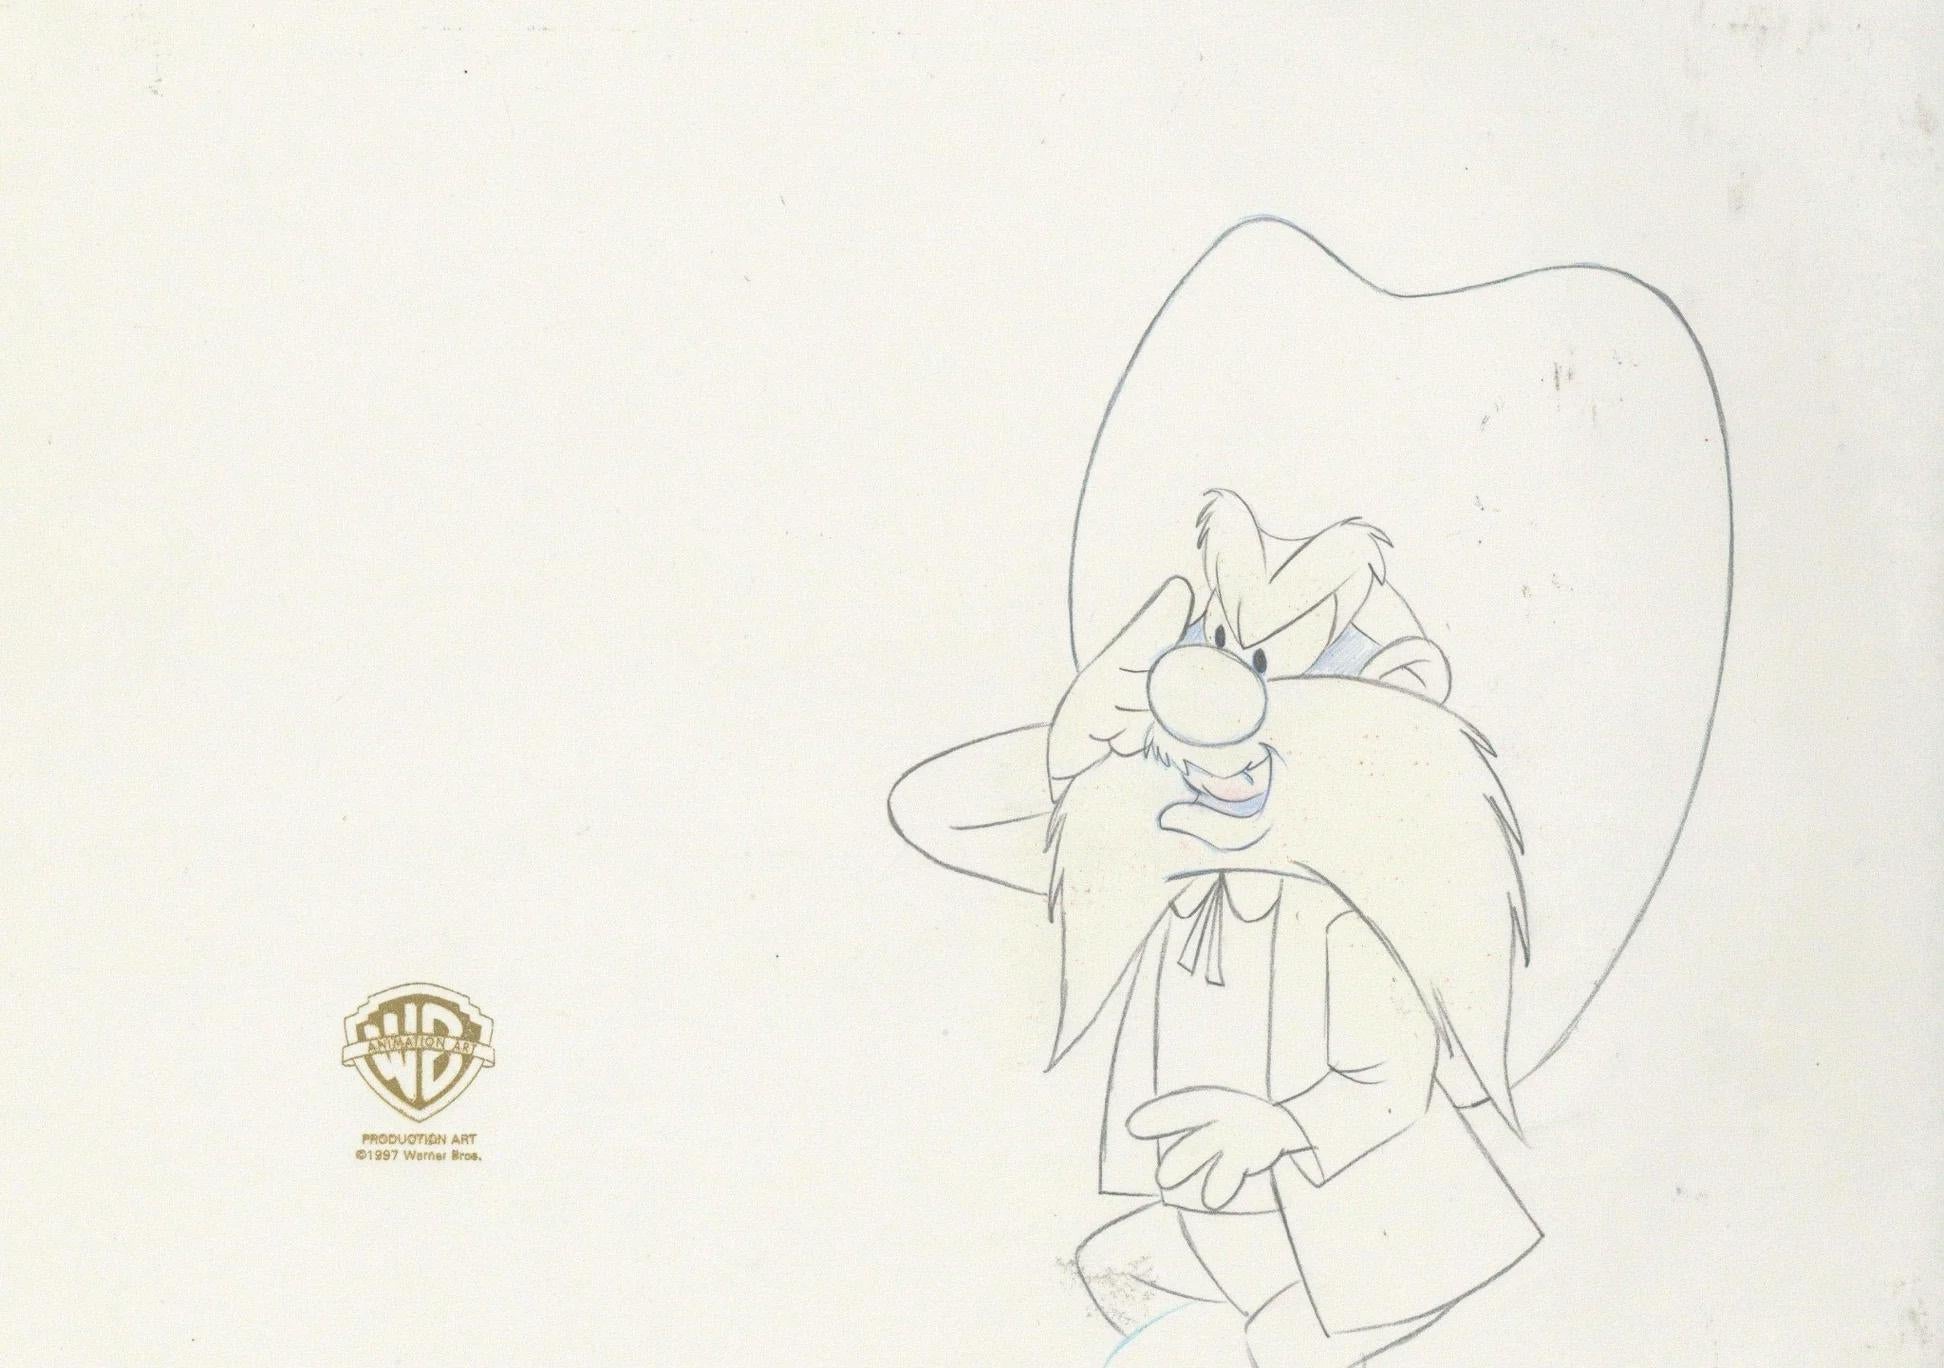 Looney Tunes Original Production Drawing: Yosemite Sam - Art by Looney Tunes Studio Artists